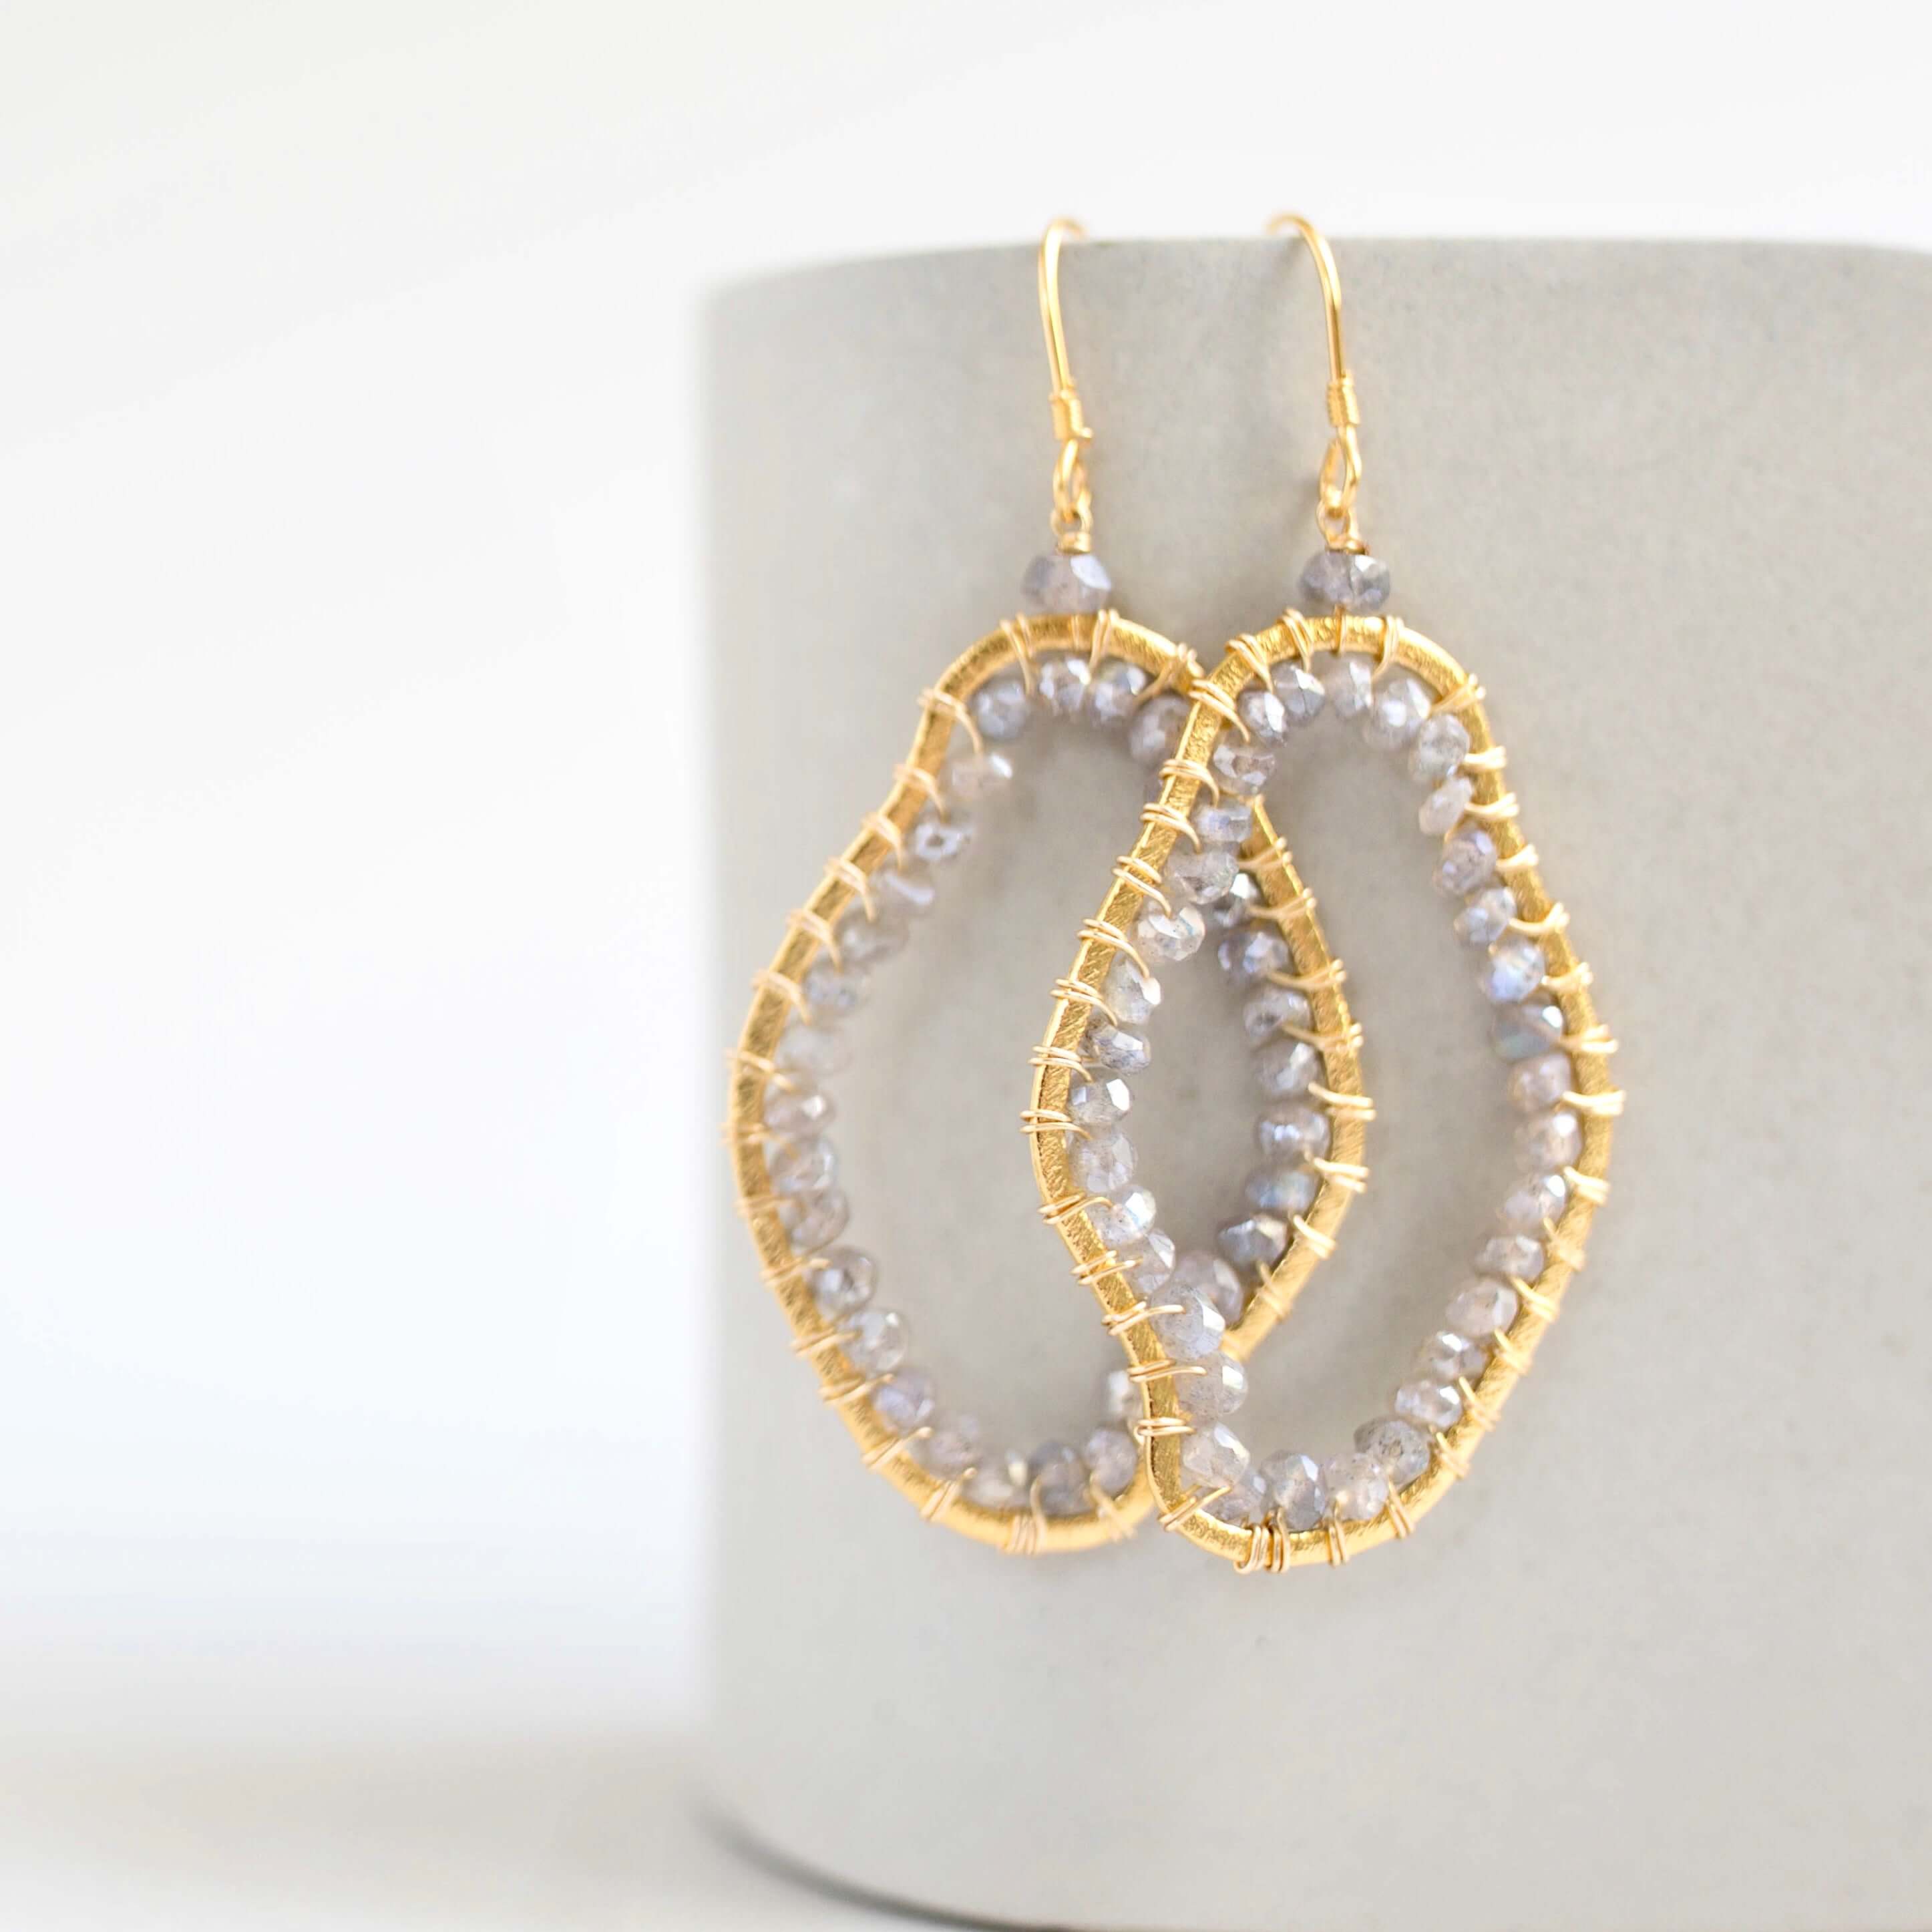 Elegant 2.5" long earrings featuring stunning labradorite gemstones.